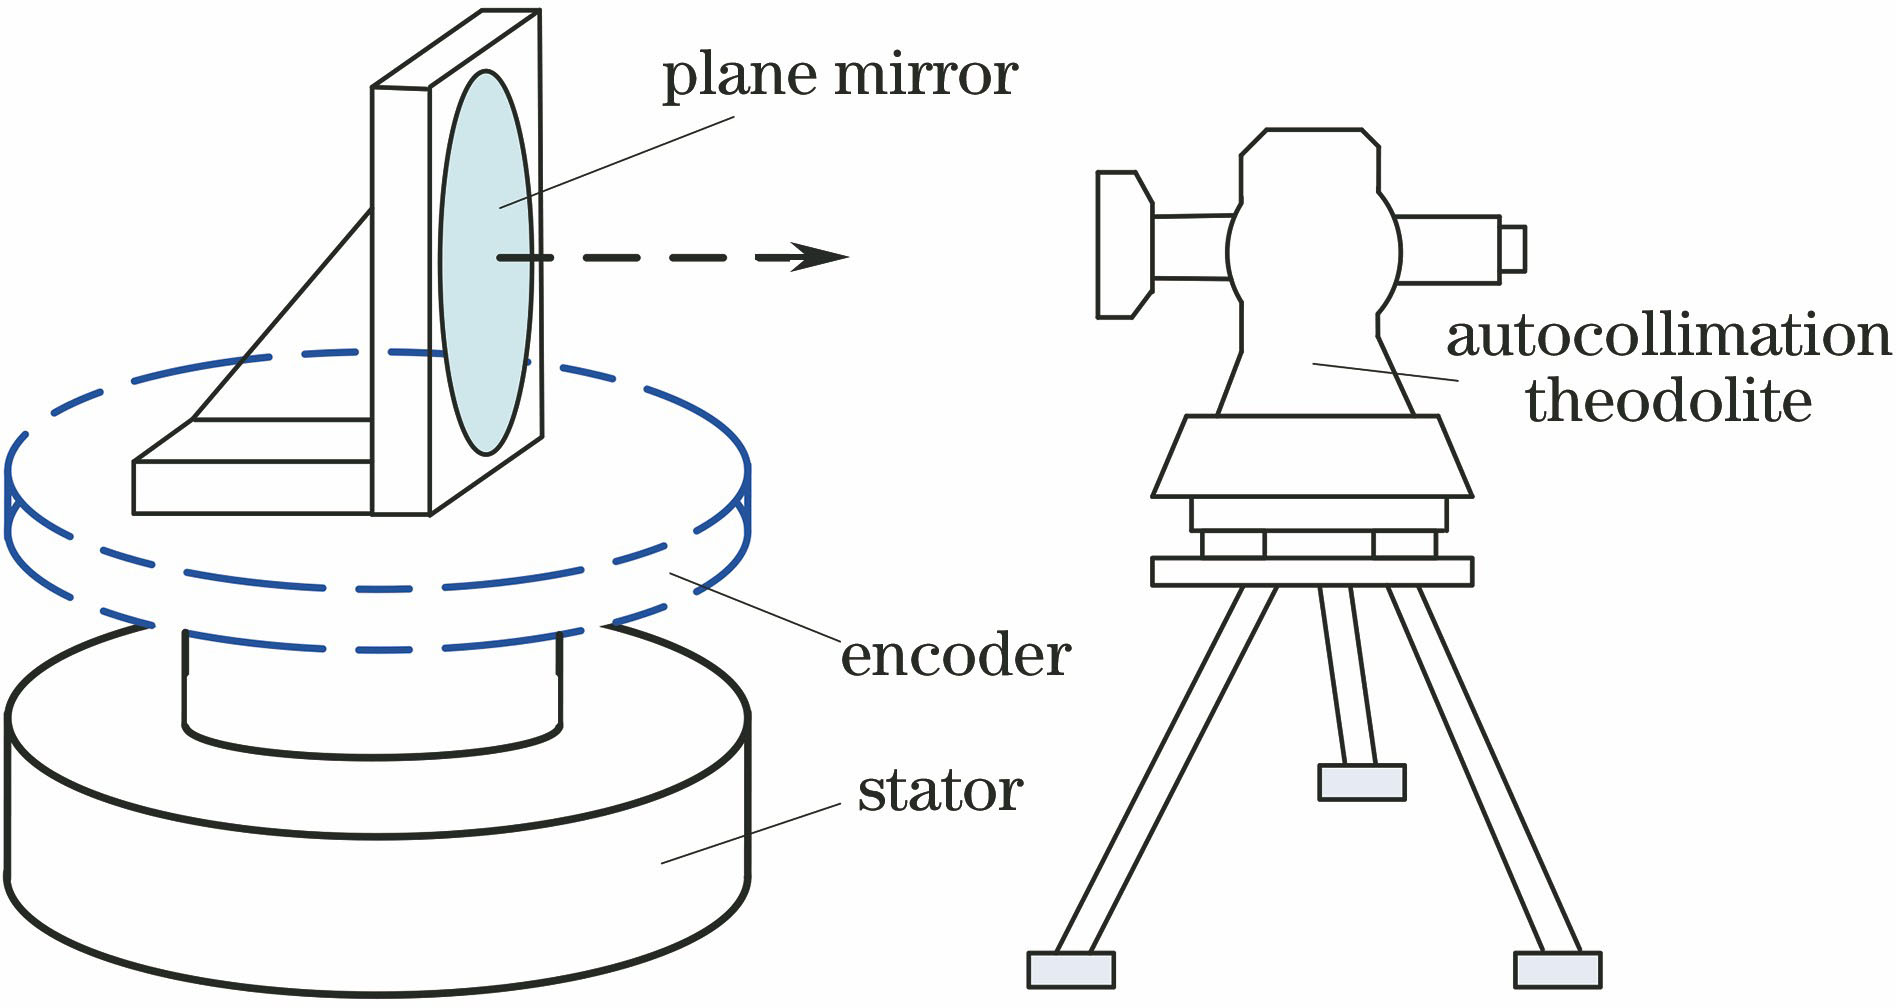 Schematic of using plane mirror-autocollimation theodolite to measure angle error